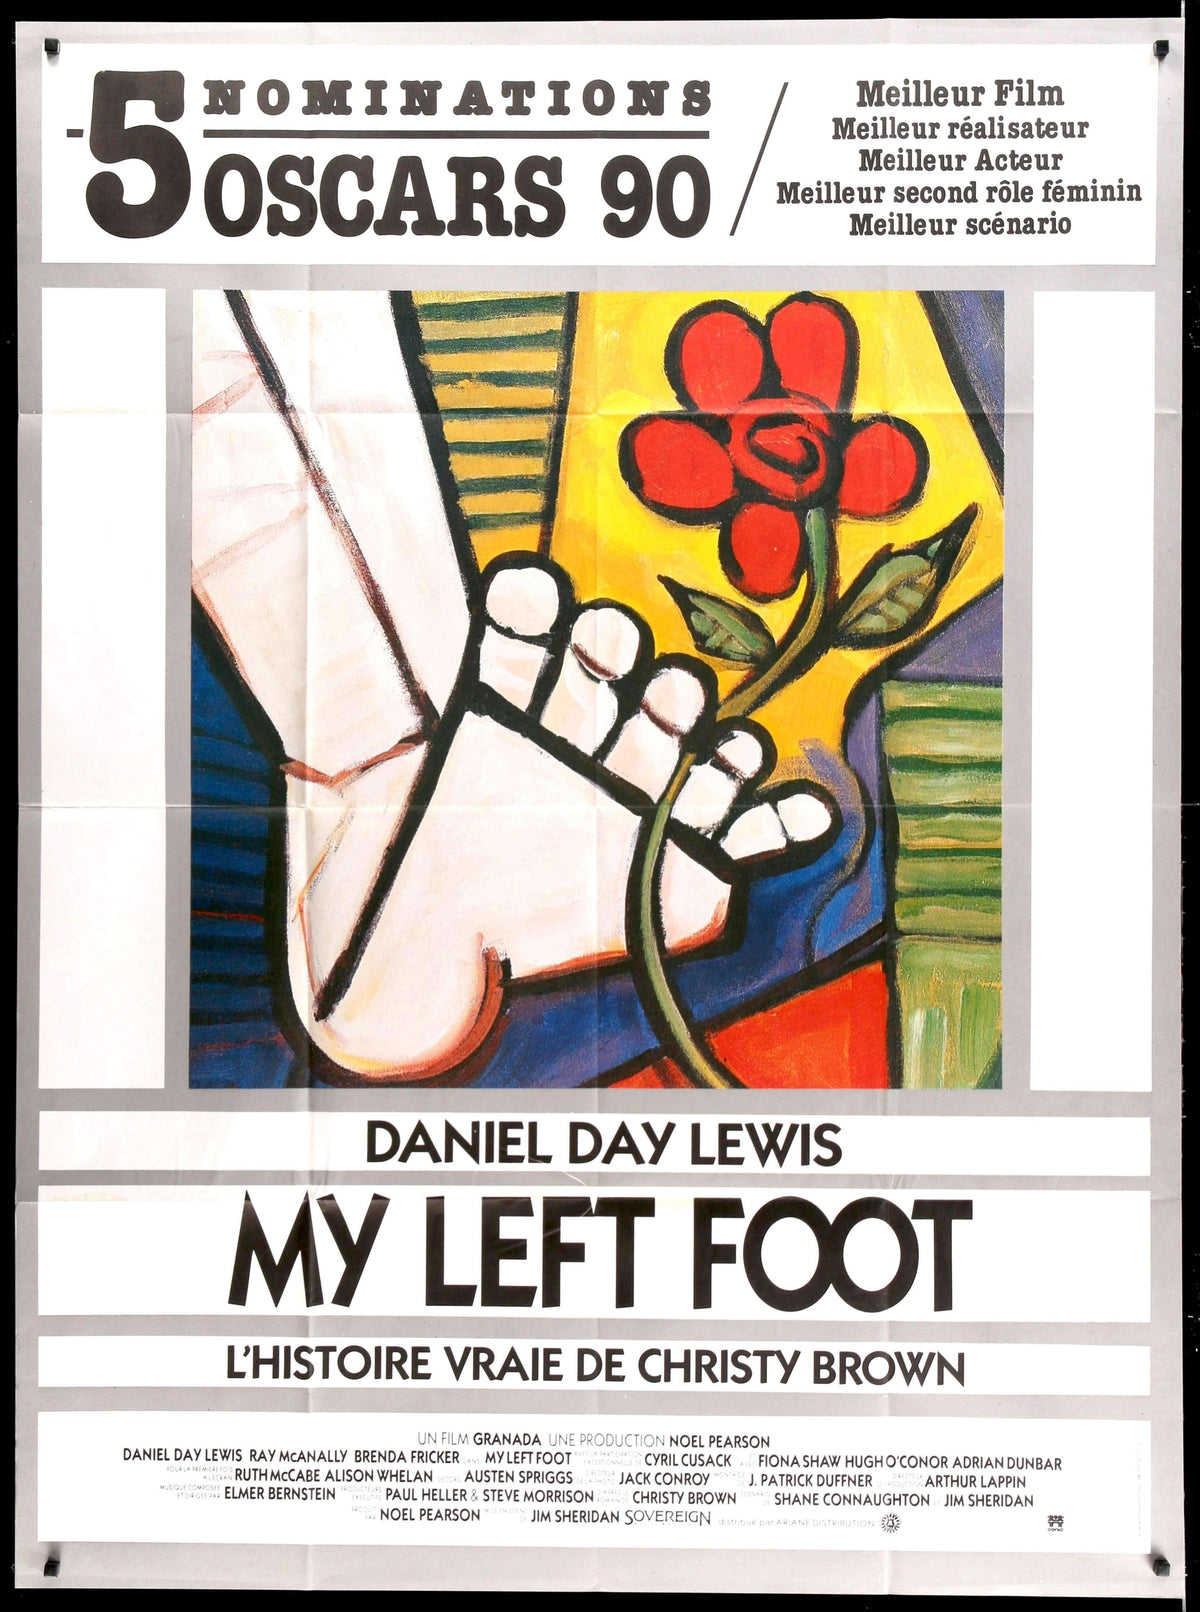 My Left Foot (1989) original movie poster for sale at Original Film Art